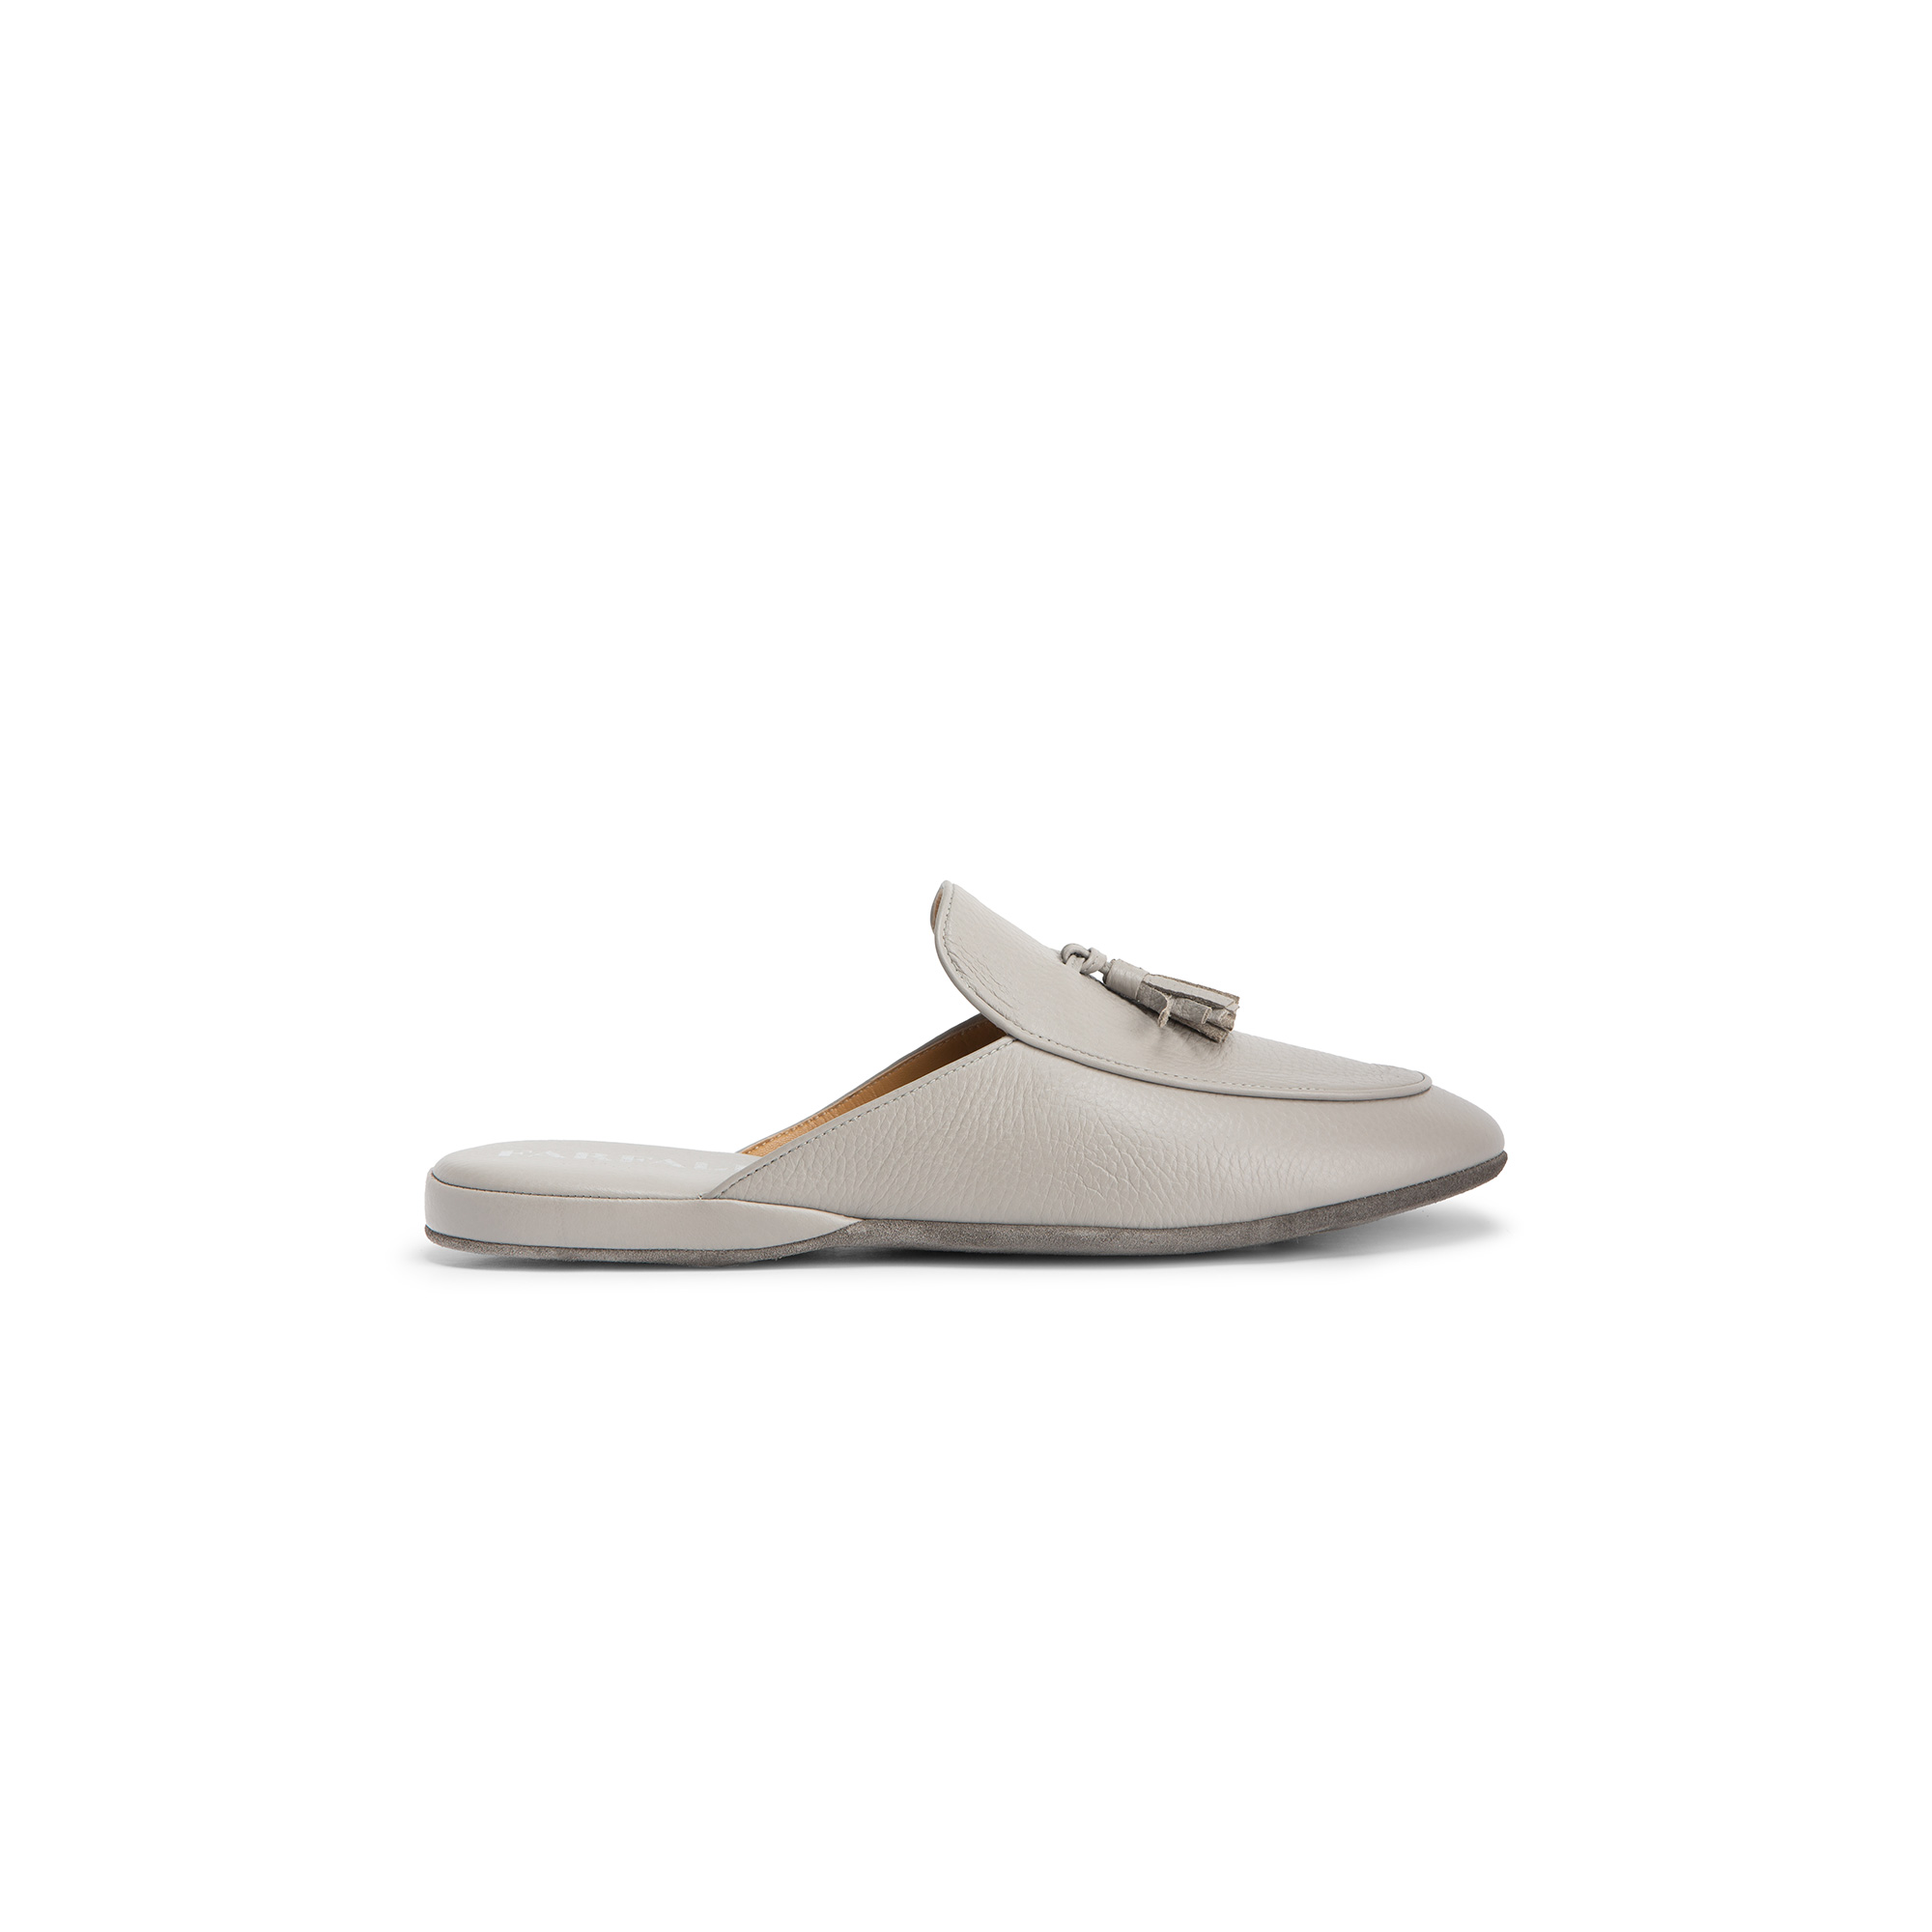 Pantofola aperta interno cervo smog - Farfalla italian slippers